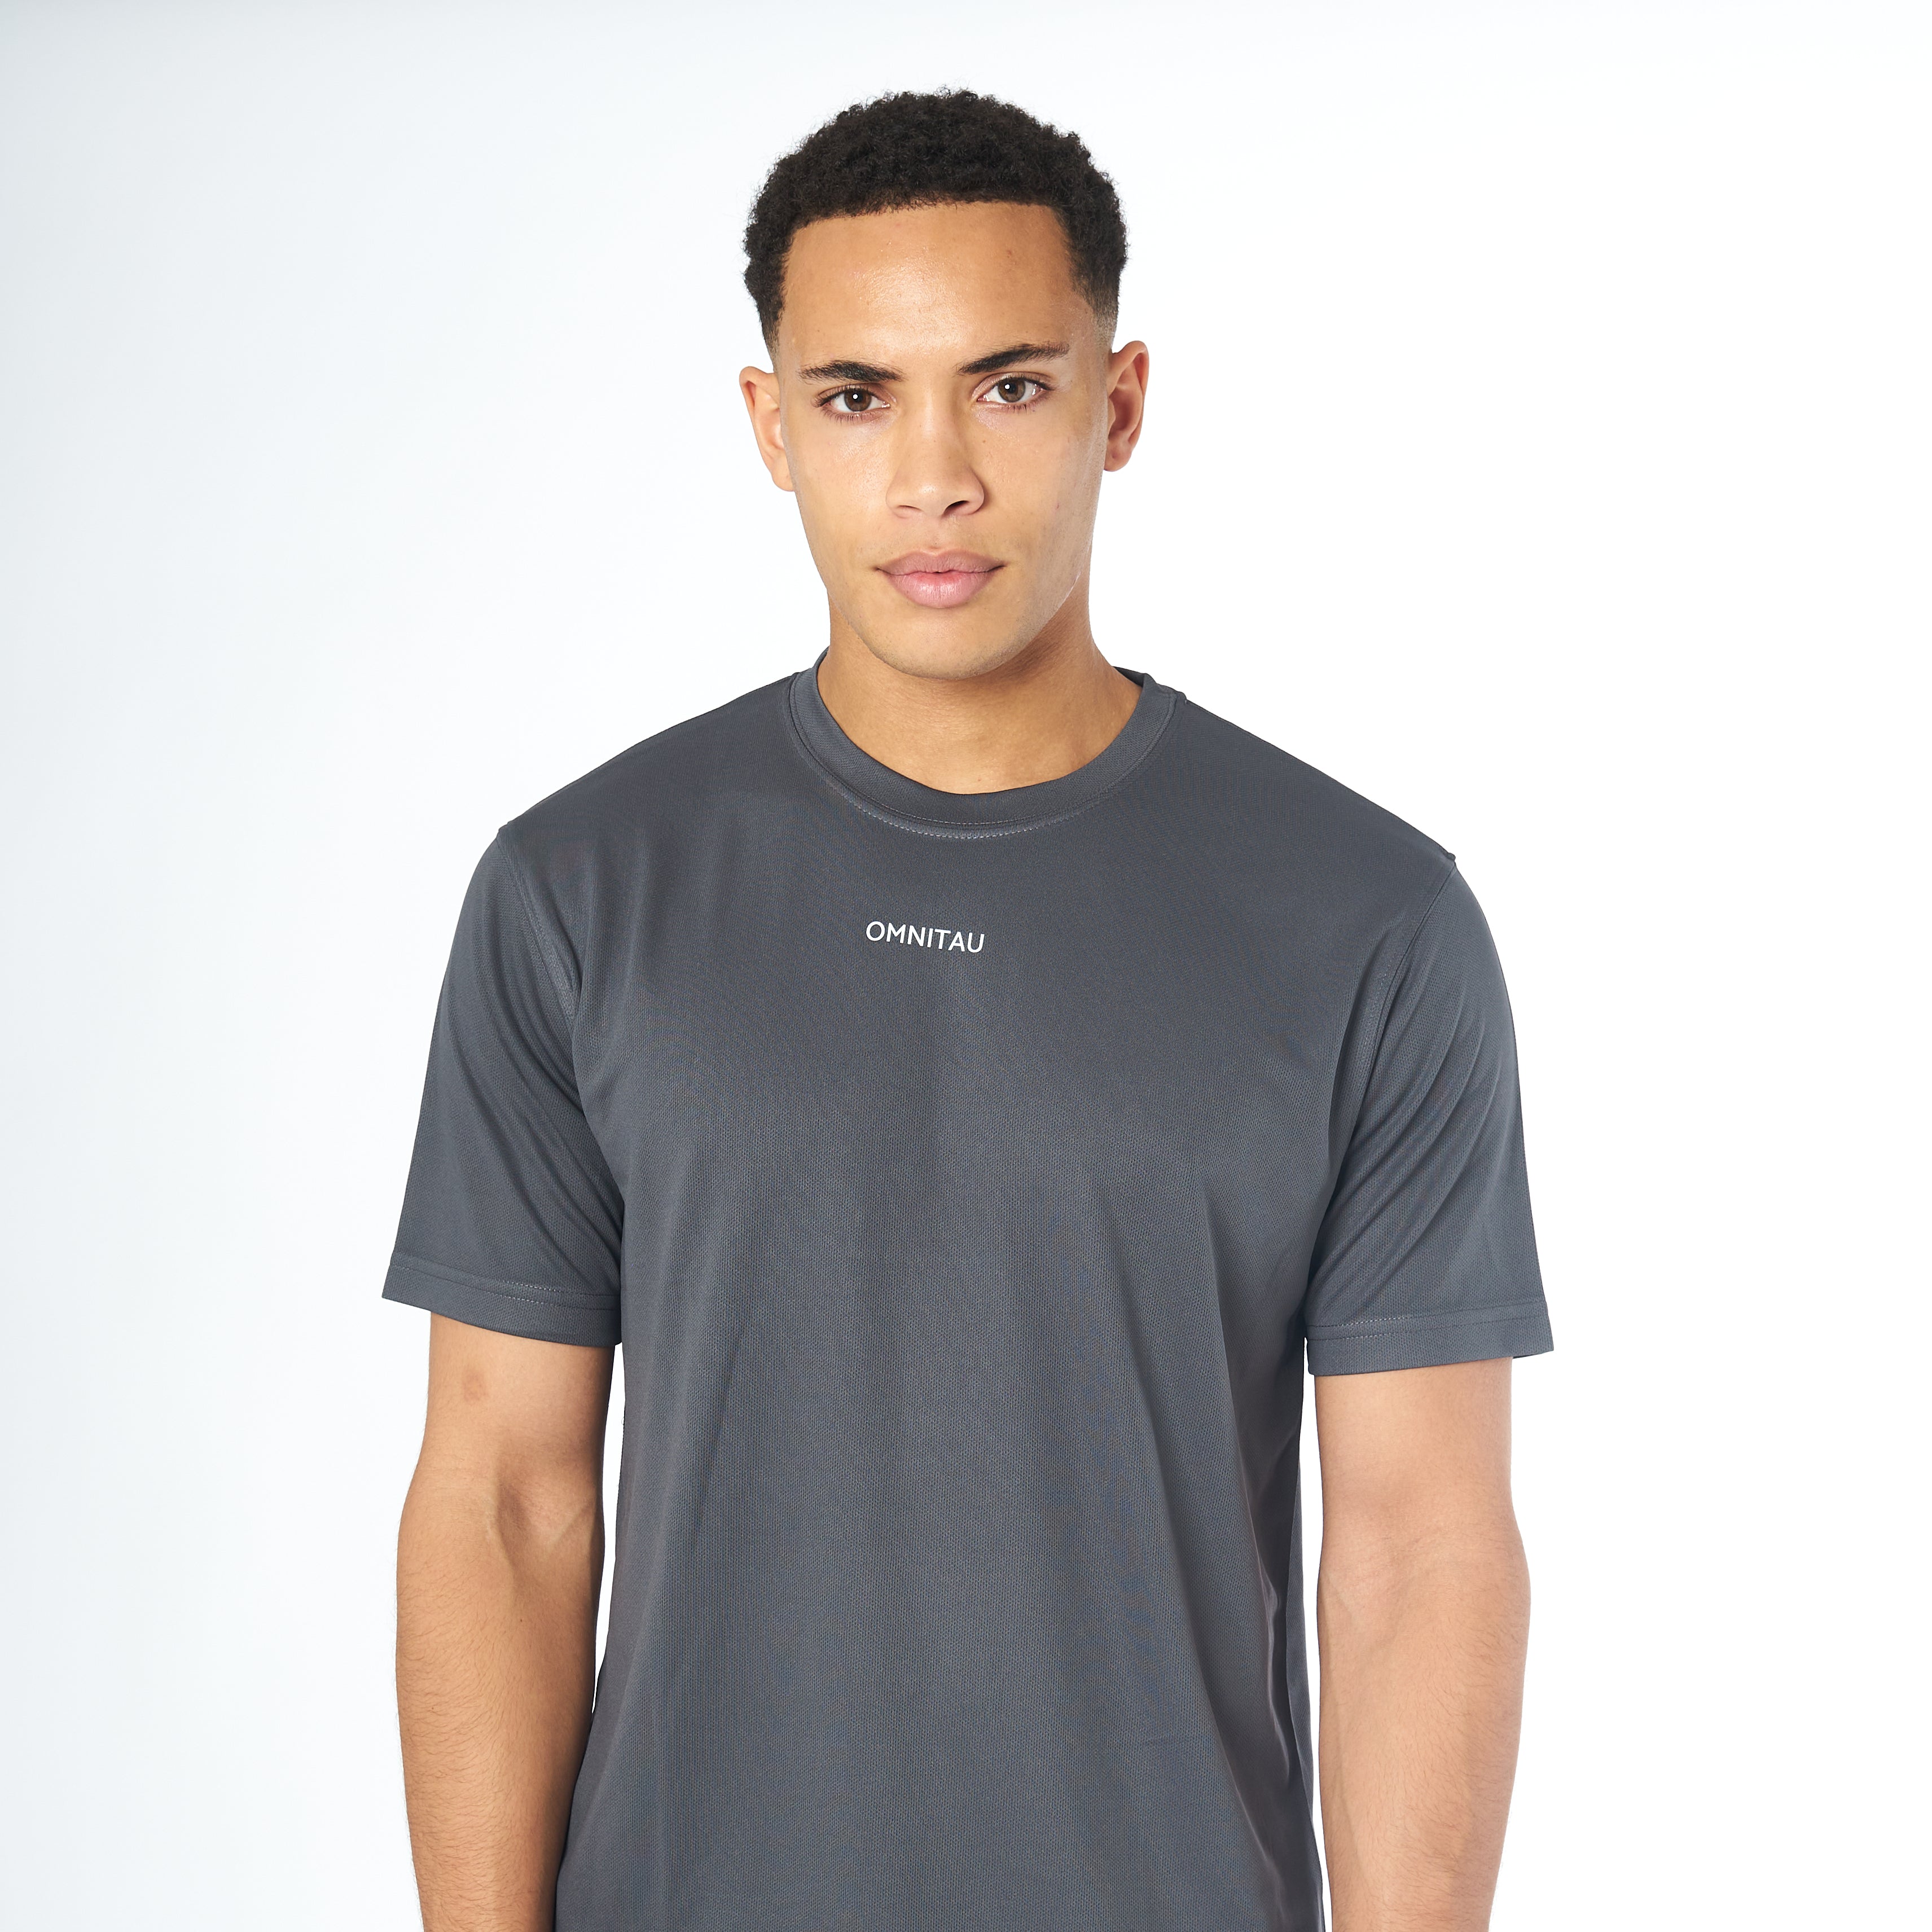 Omnitau Men's Strive Recycled Technical T-Shirt - Charcoal Grey